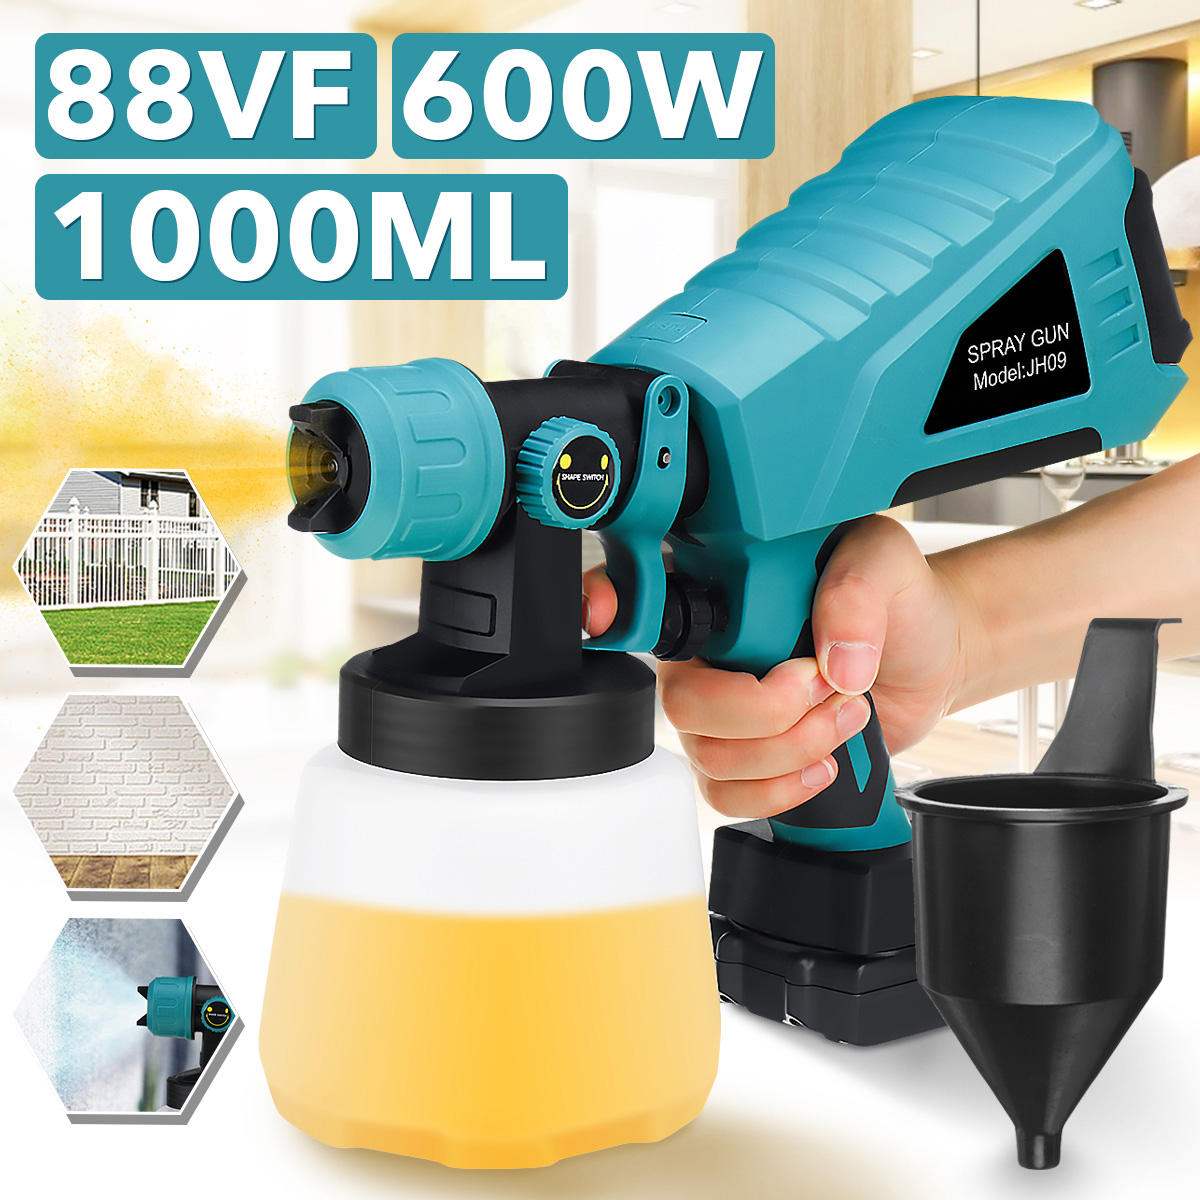 88VF-1000ML-Removable-Electric-Spray-Guns-Household-Convenience-Spray-Paint-W-Li-ion-Battery-For-Mak-1873507-1